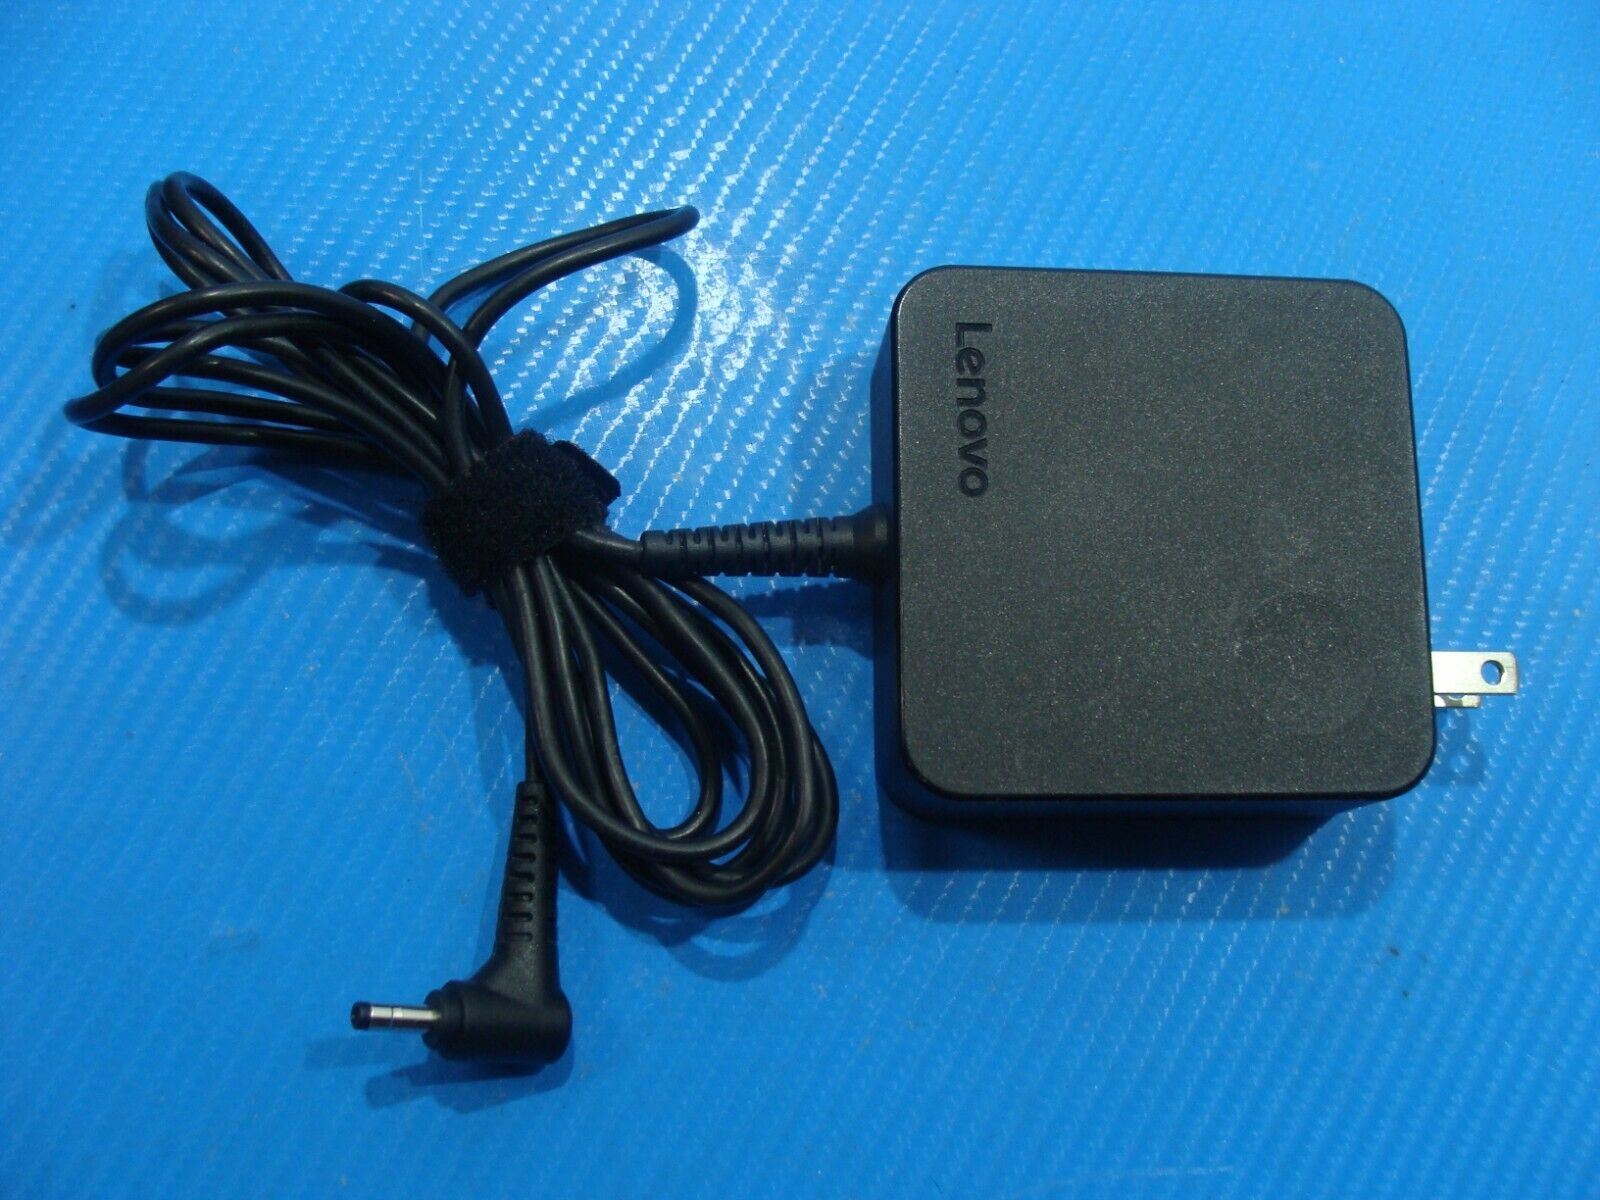 Chargeur compatible PC Portable LENOVO 20V/3.25A